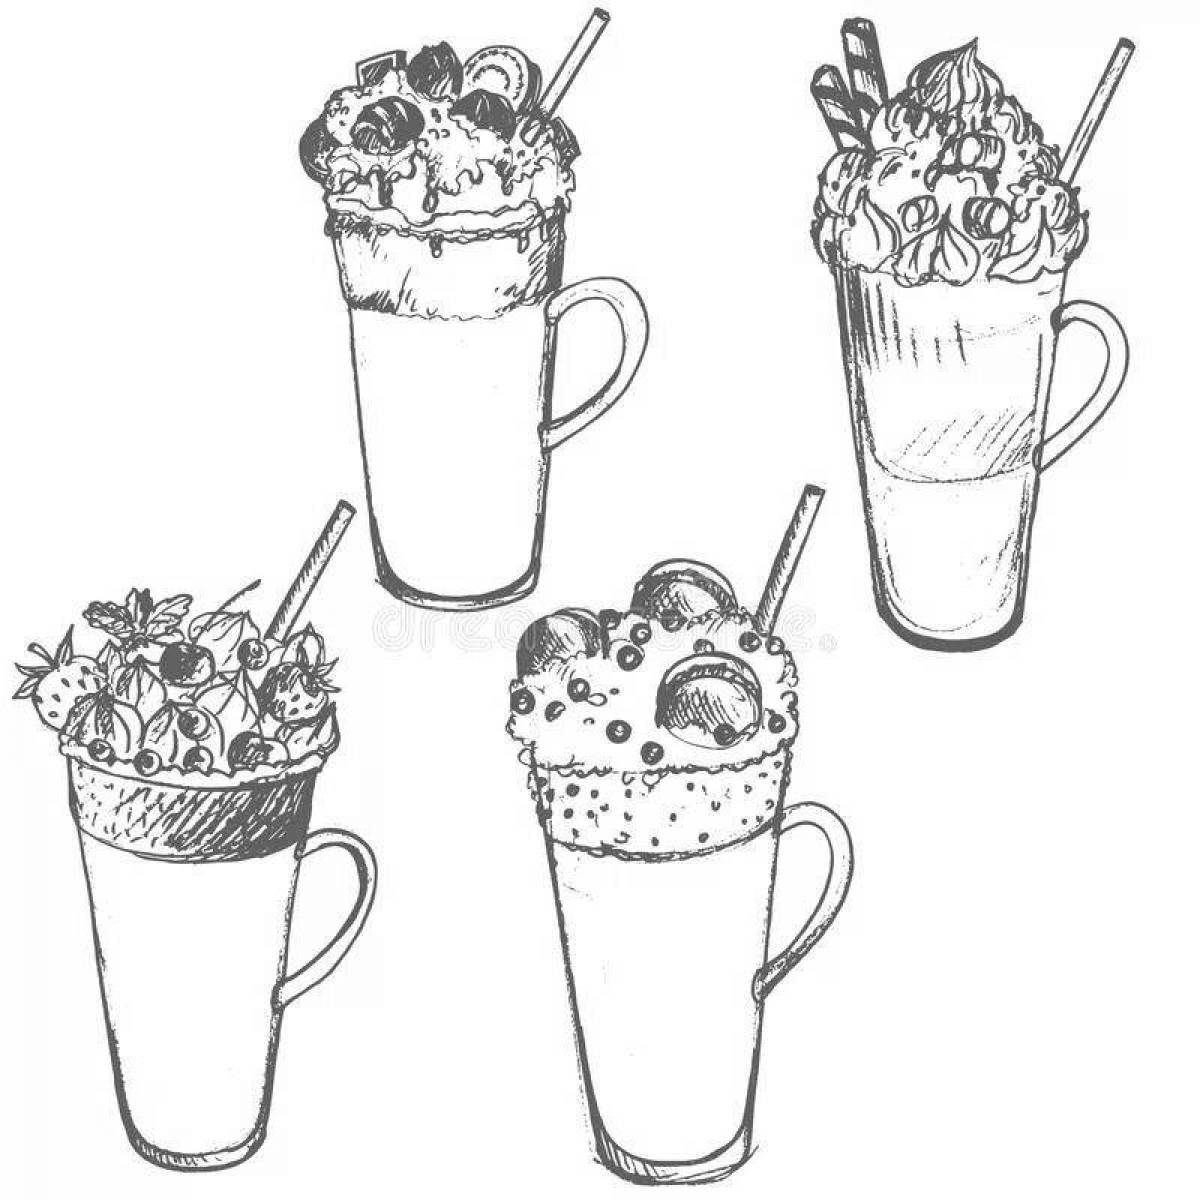 Rich milkshake coloring page